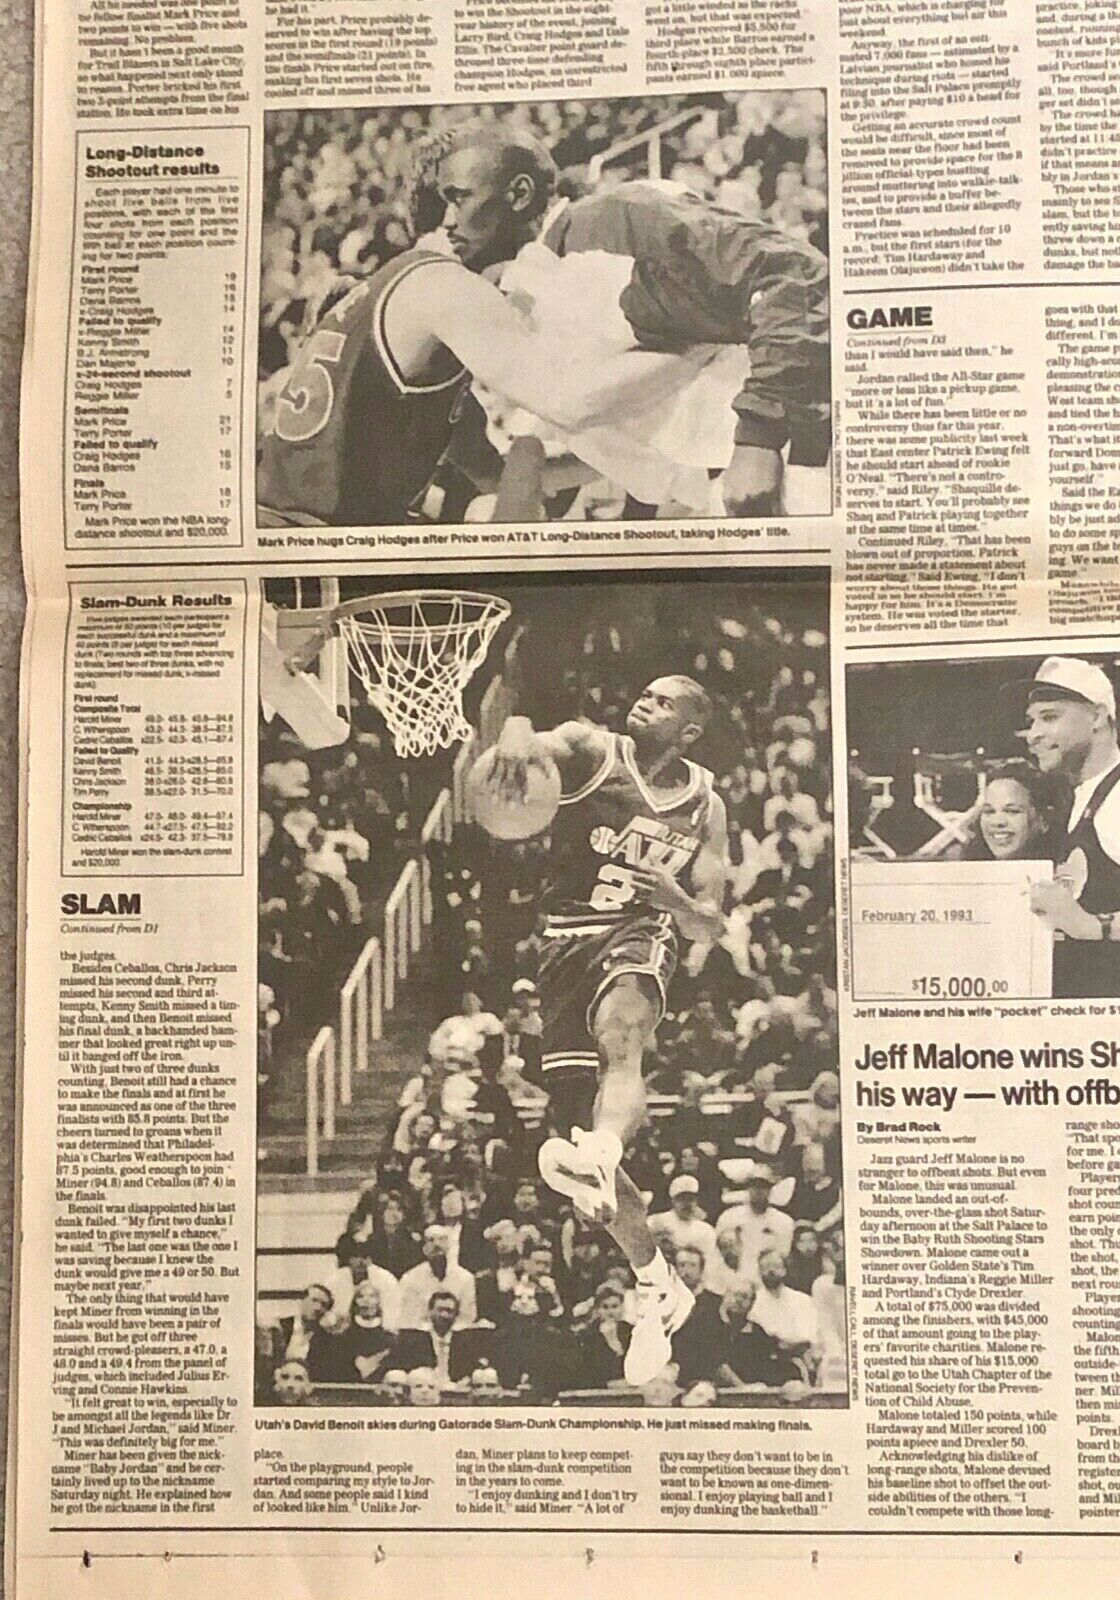 HAROLD MINER "BABY JORDAN" WINS 1993 NBA SLAM DUNK TITLE- UTAH NEWSPAPERS (2) Deseret News + Salt Lake Tribune - фотография #4